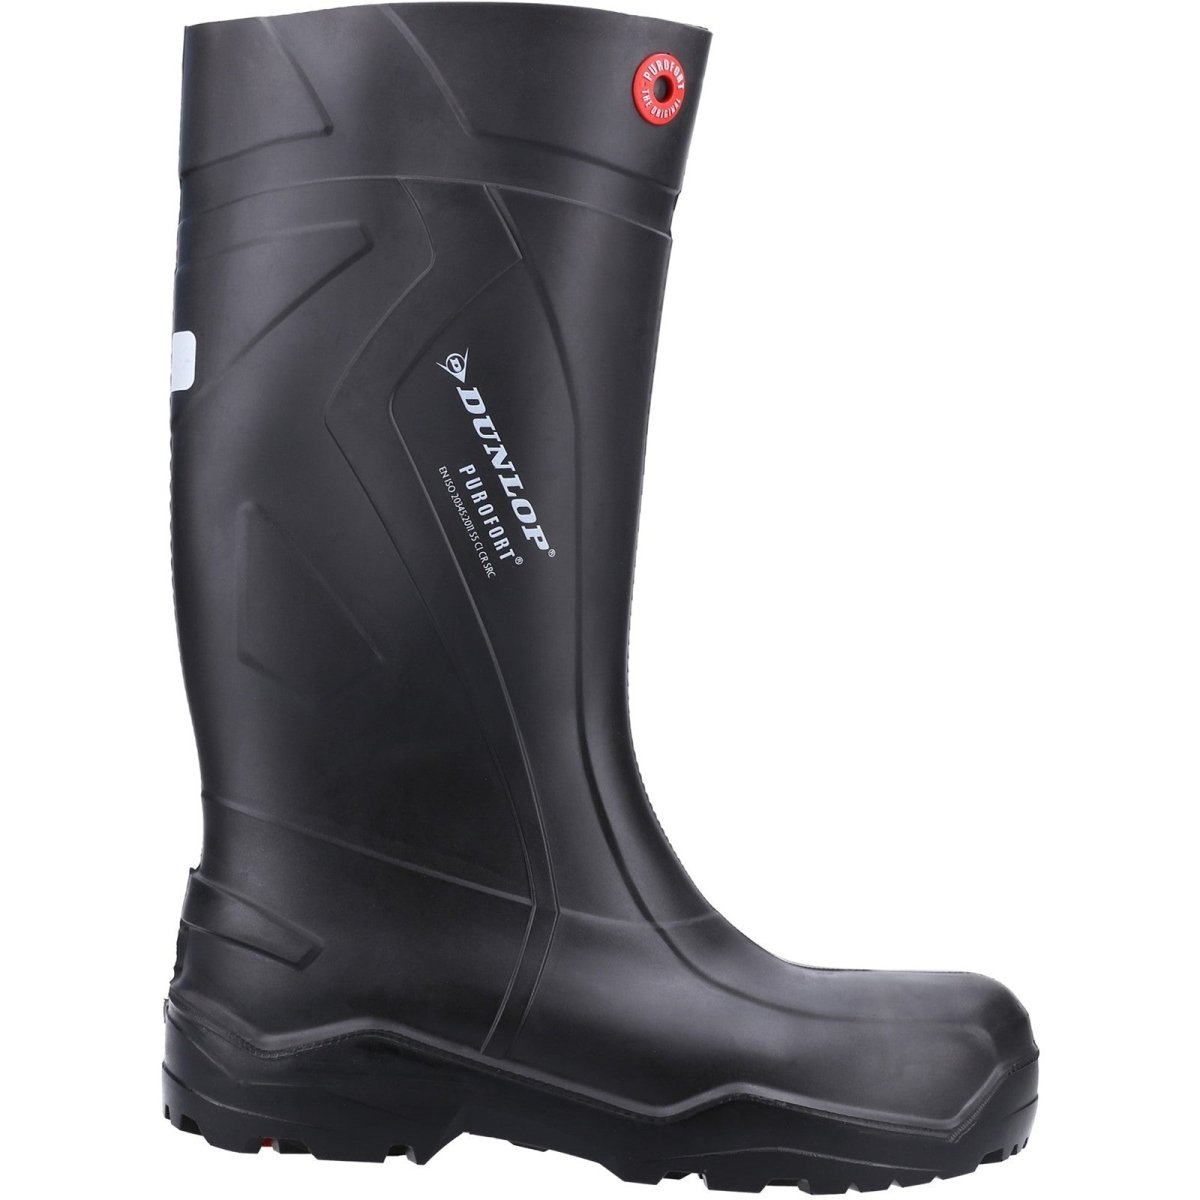 Dunlop Purofort+ Full Safety Wellington Boots - Shoe Store Direct